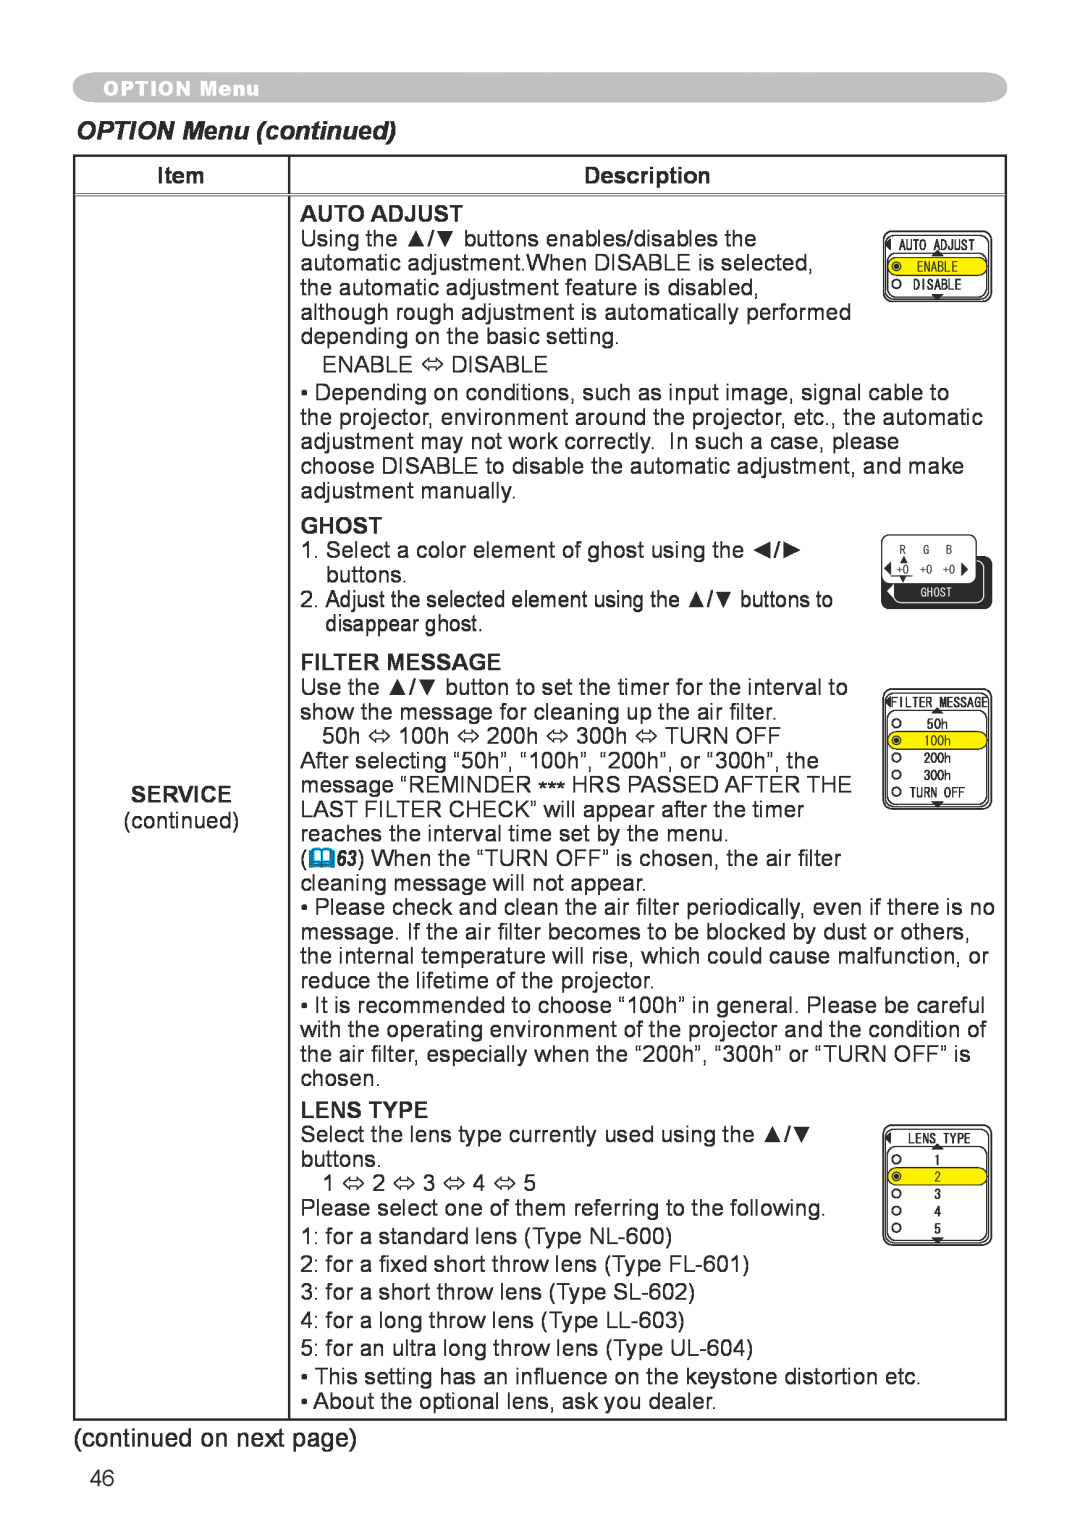 Hitachi CP-X608 user manual OPTION Menu continued, Description, Auto Adjust, Ghost, Filter Message, Service, Lens Type 